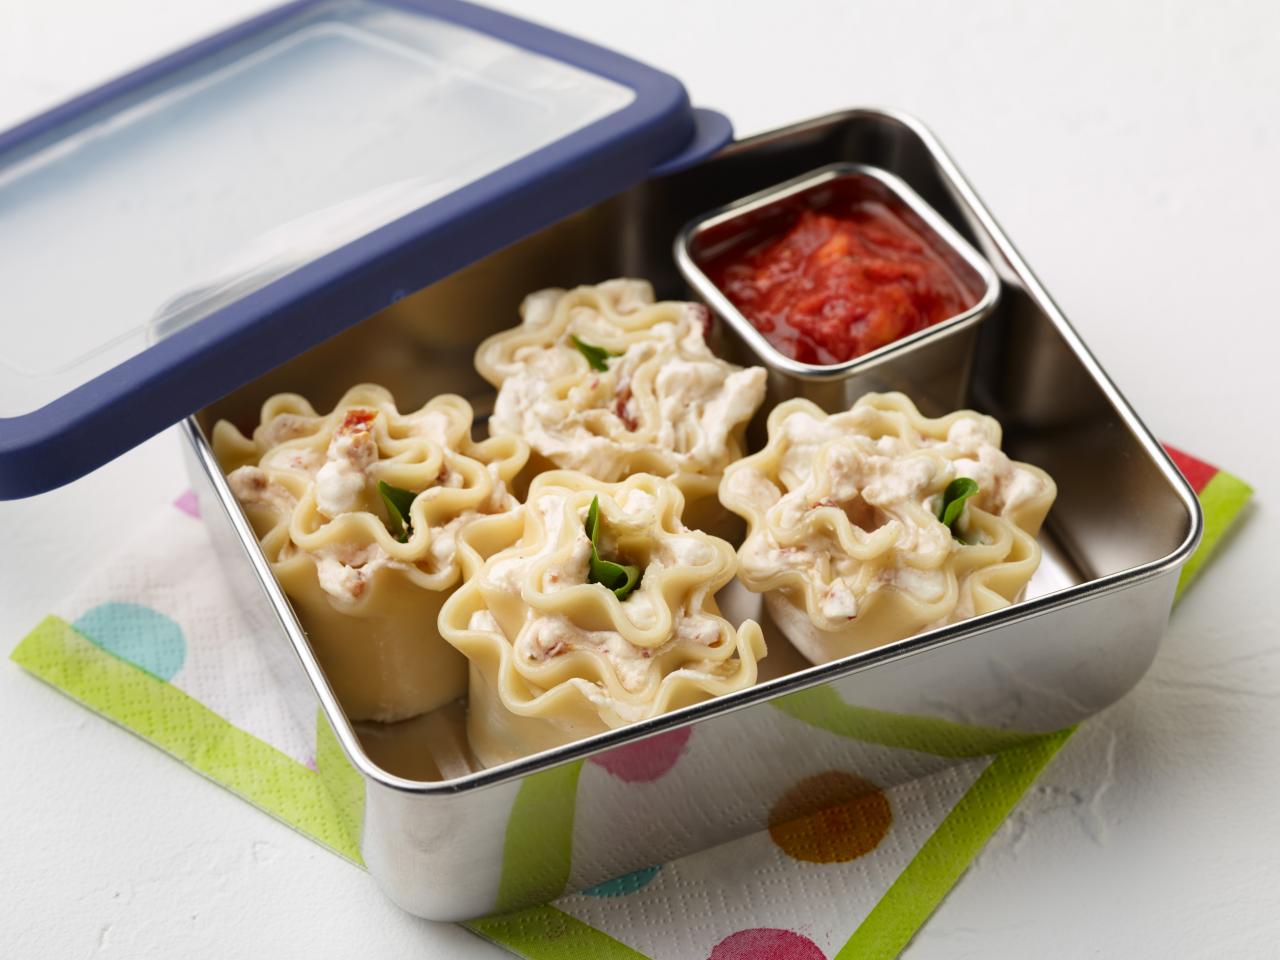 Toddler Lunch Ideas! Bento Box - Healthy, Easy & Kosher! 